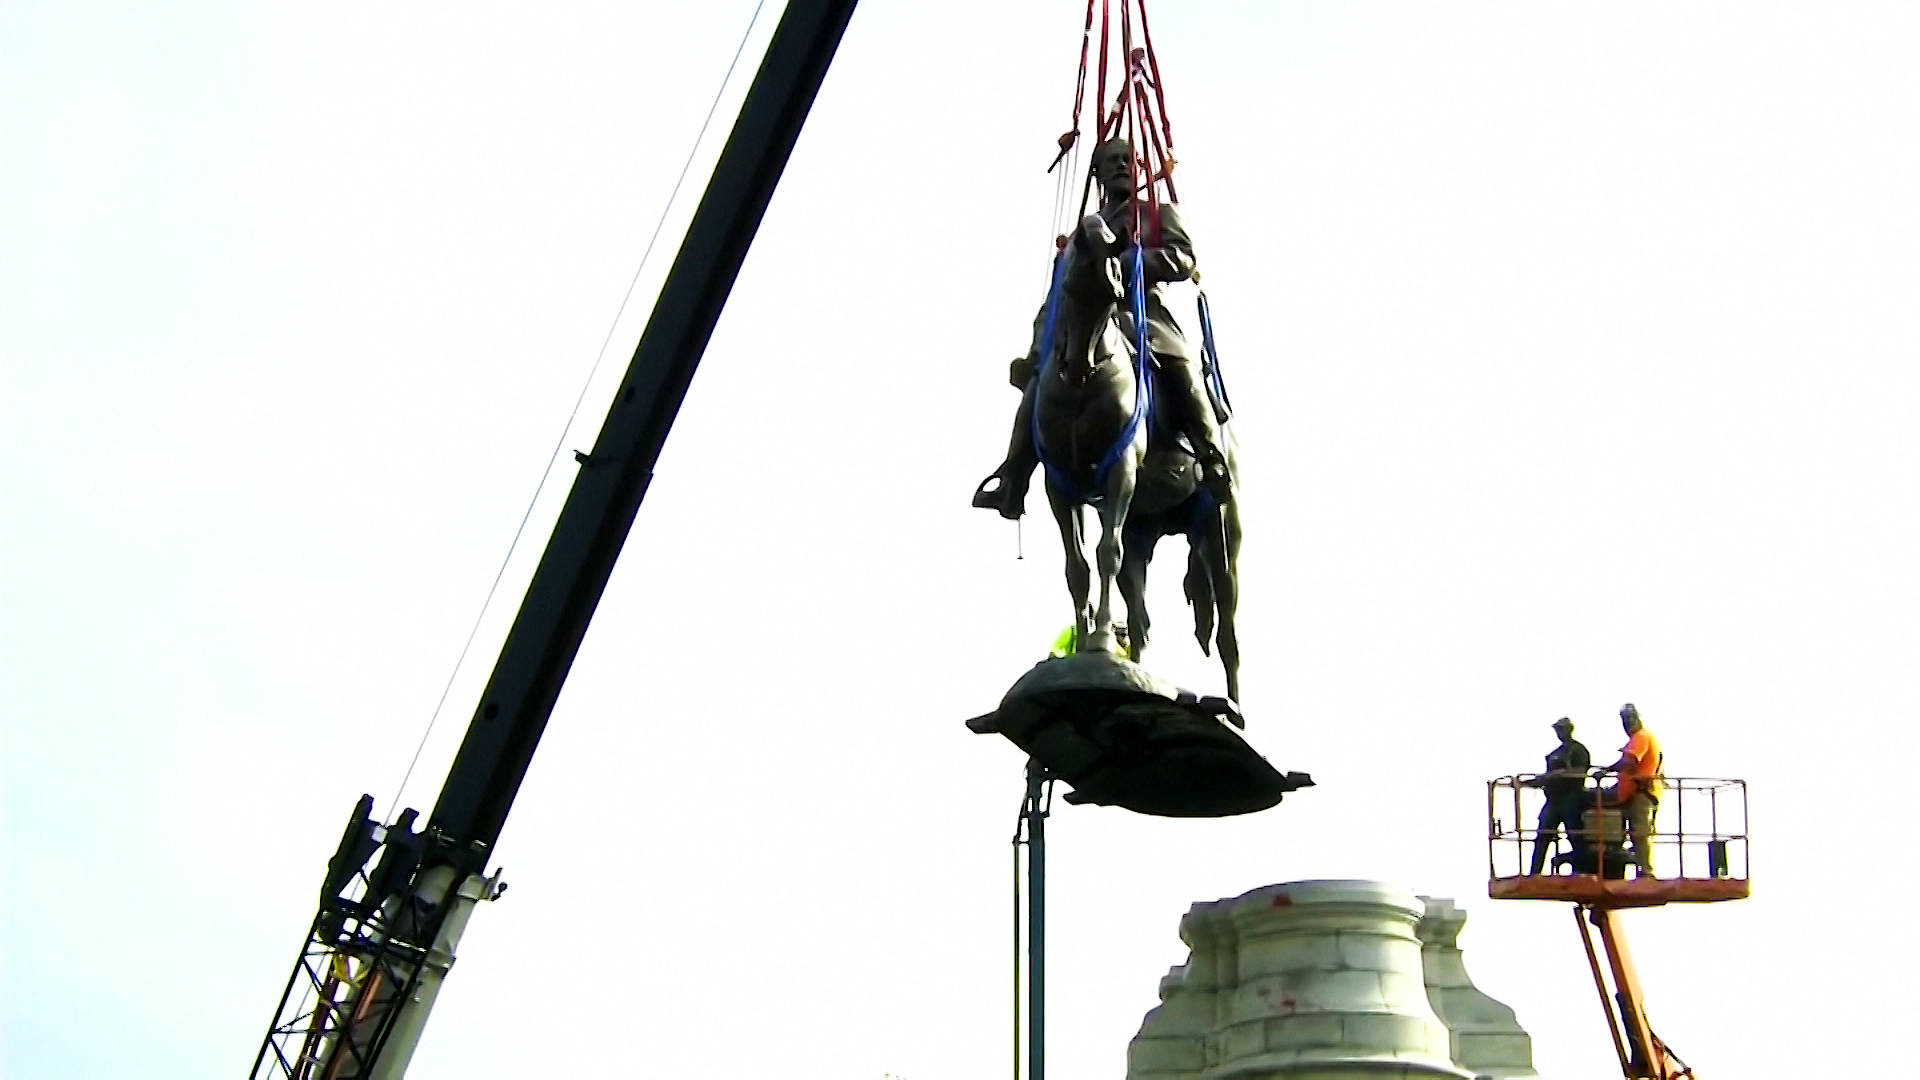 Virginia Removes Statue of Confederate General Robert E. Lee - Democracy Now!